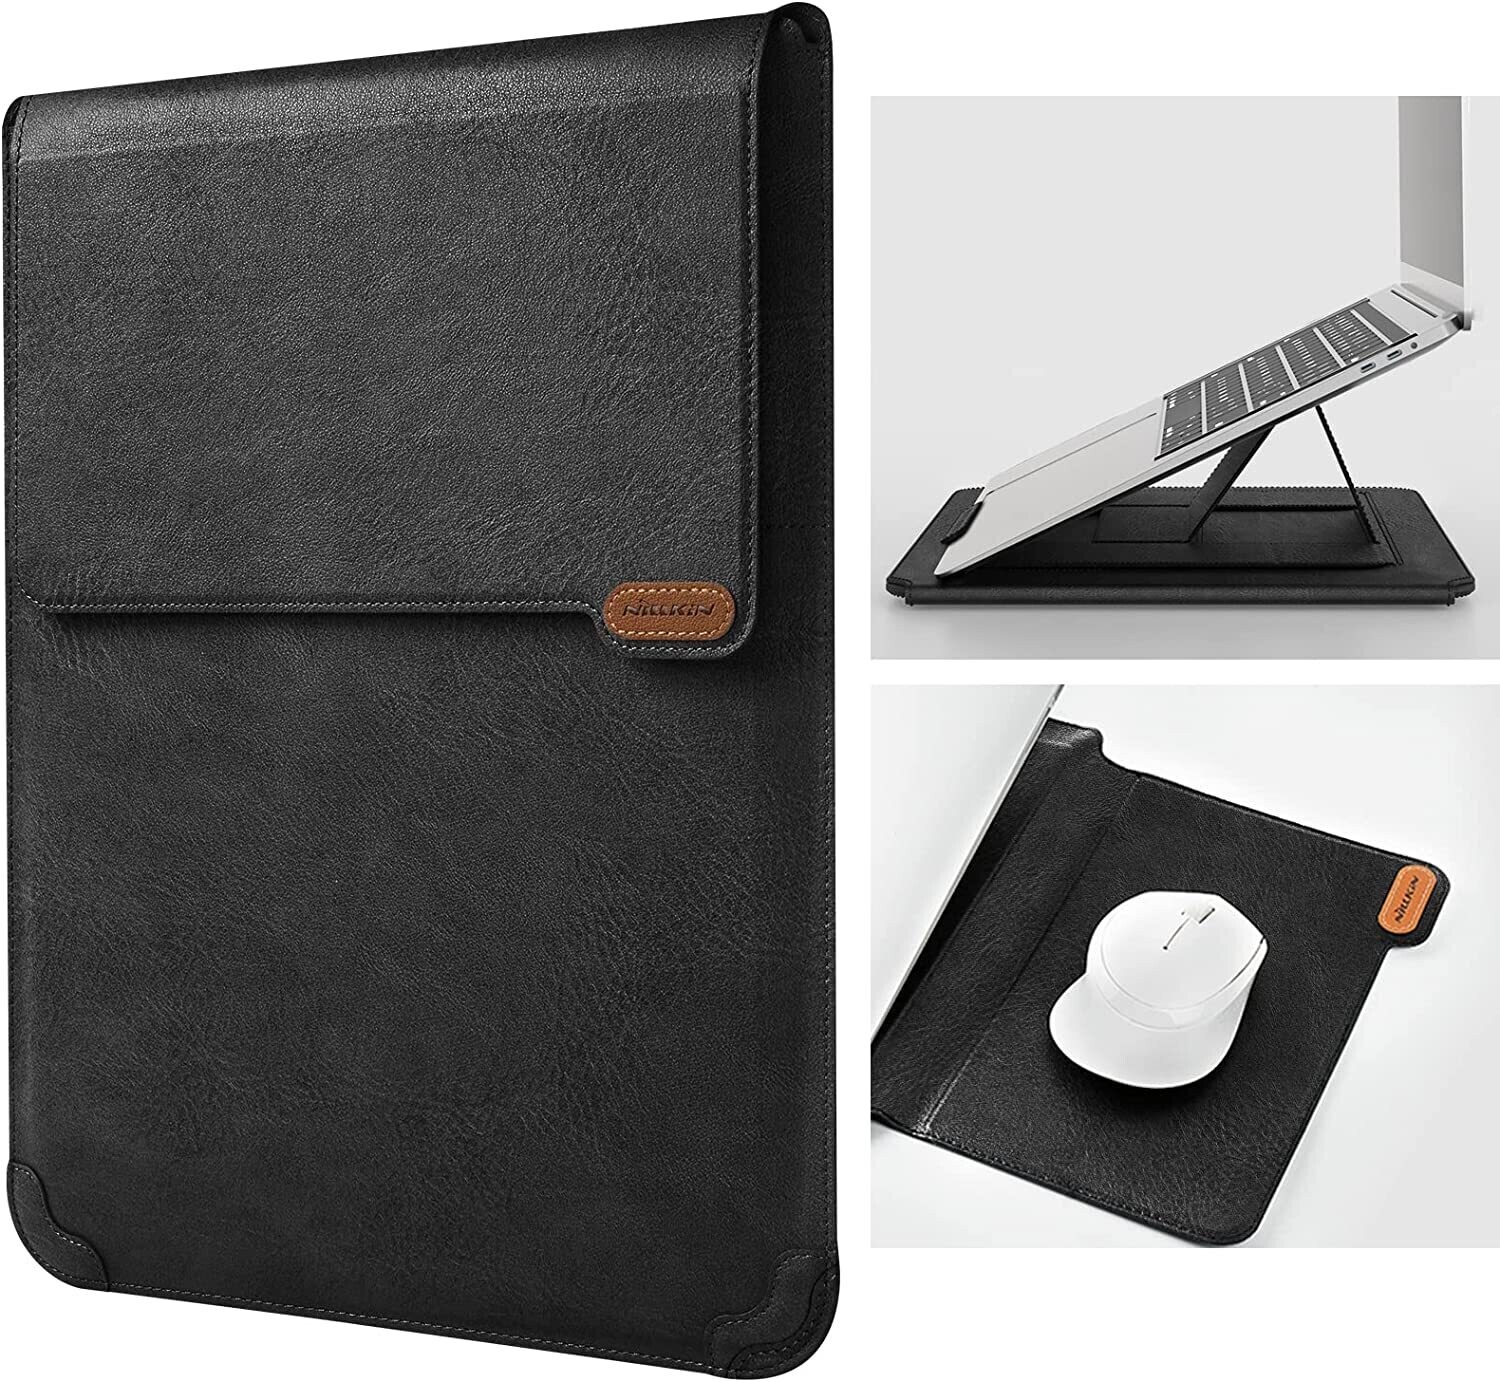 Nillkin OEM 3 in 1 Multifunctional Versatile Laptop Sleeve 16" Laptop Stand Adjustable, Computer Shock Resistant Bag with Mouse Pad